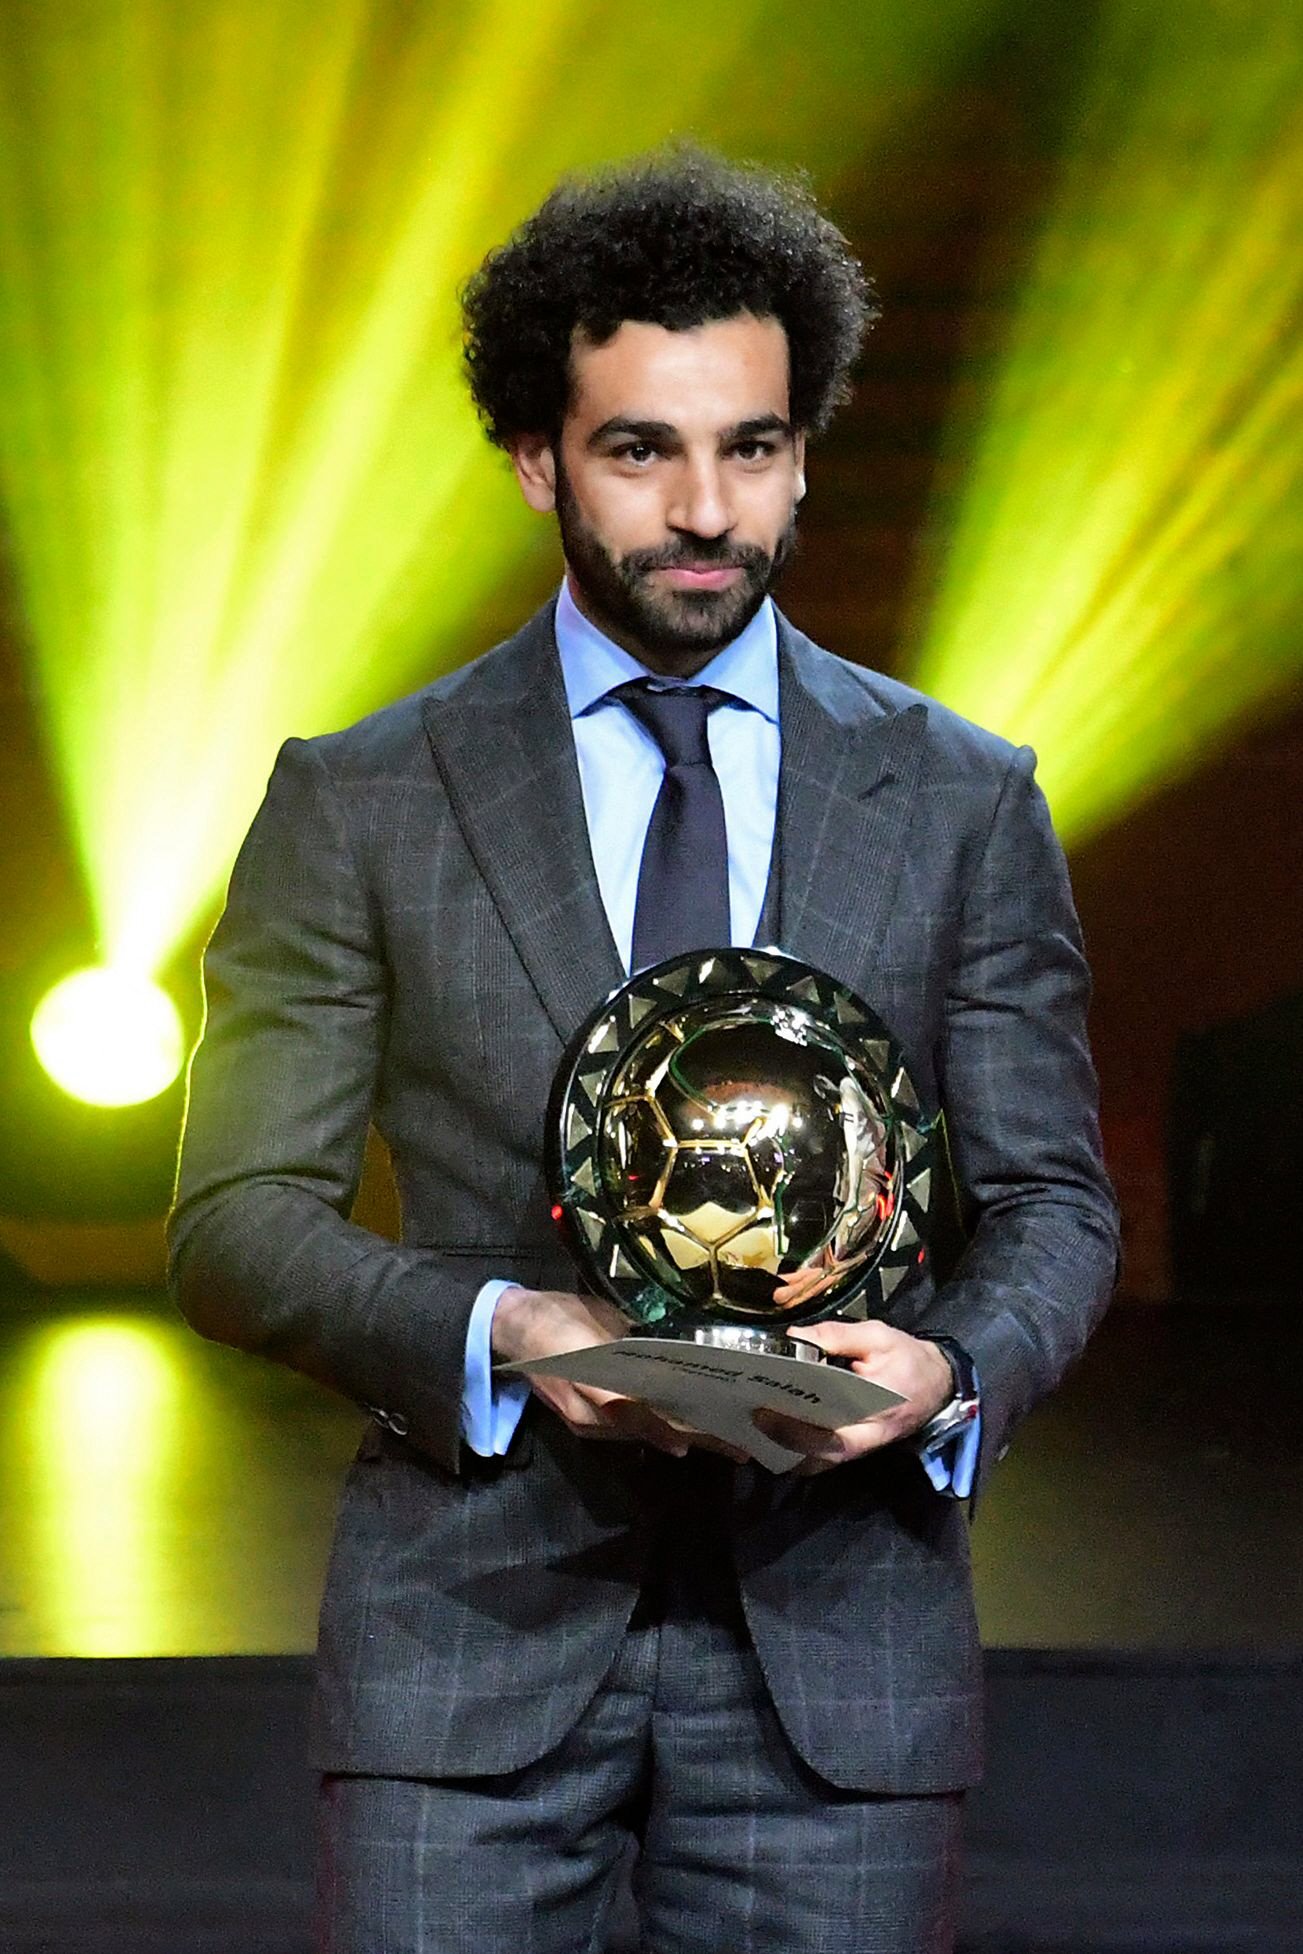 salah retains african player of the year award